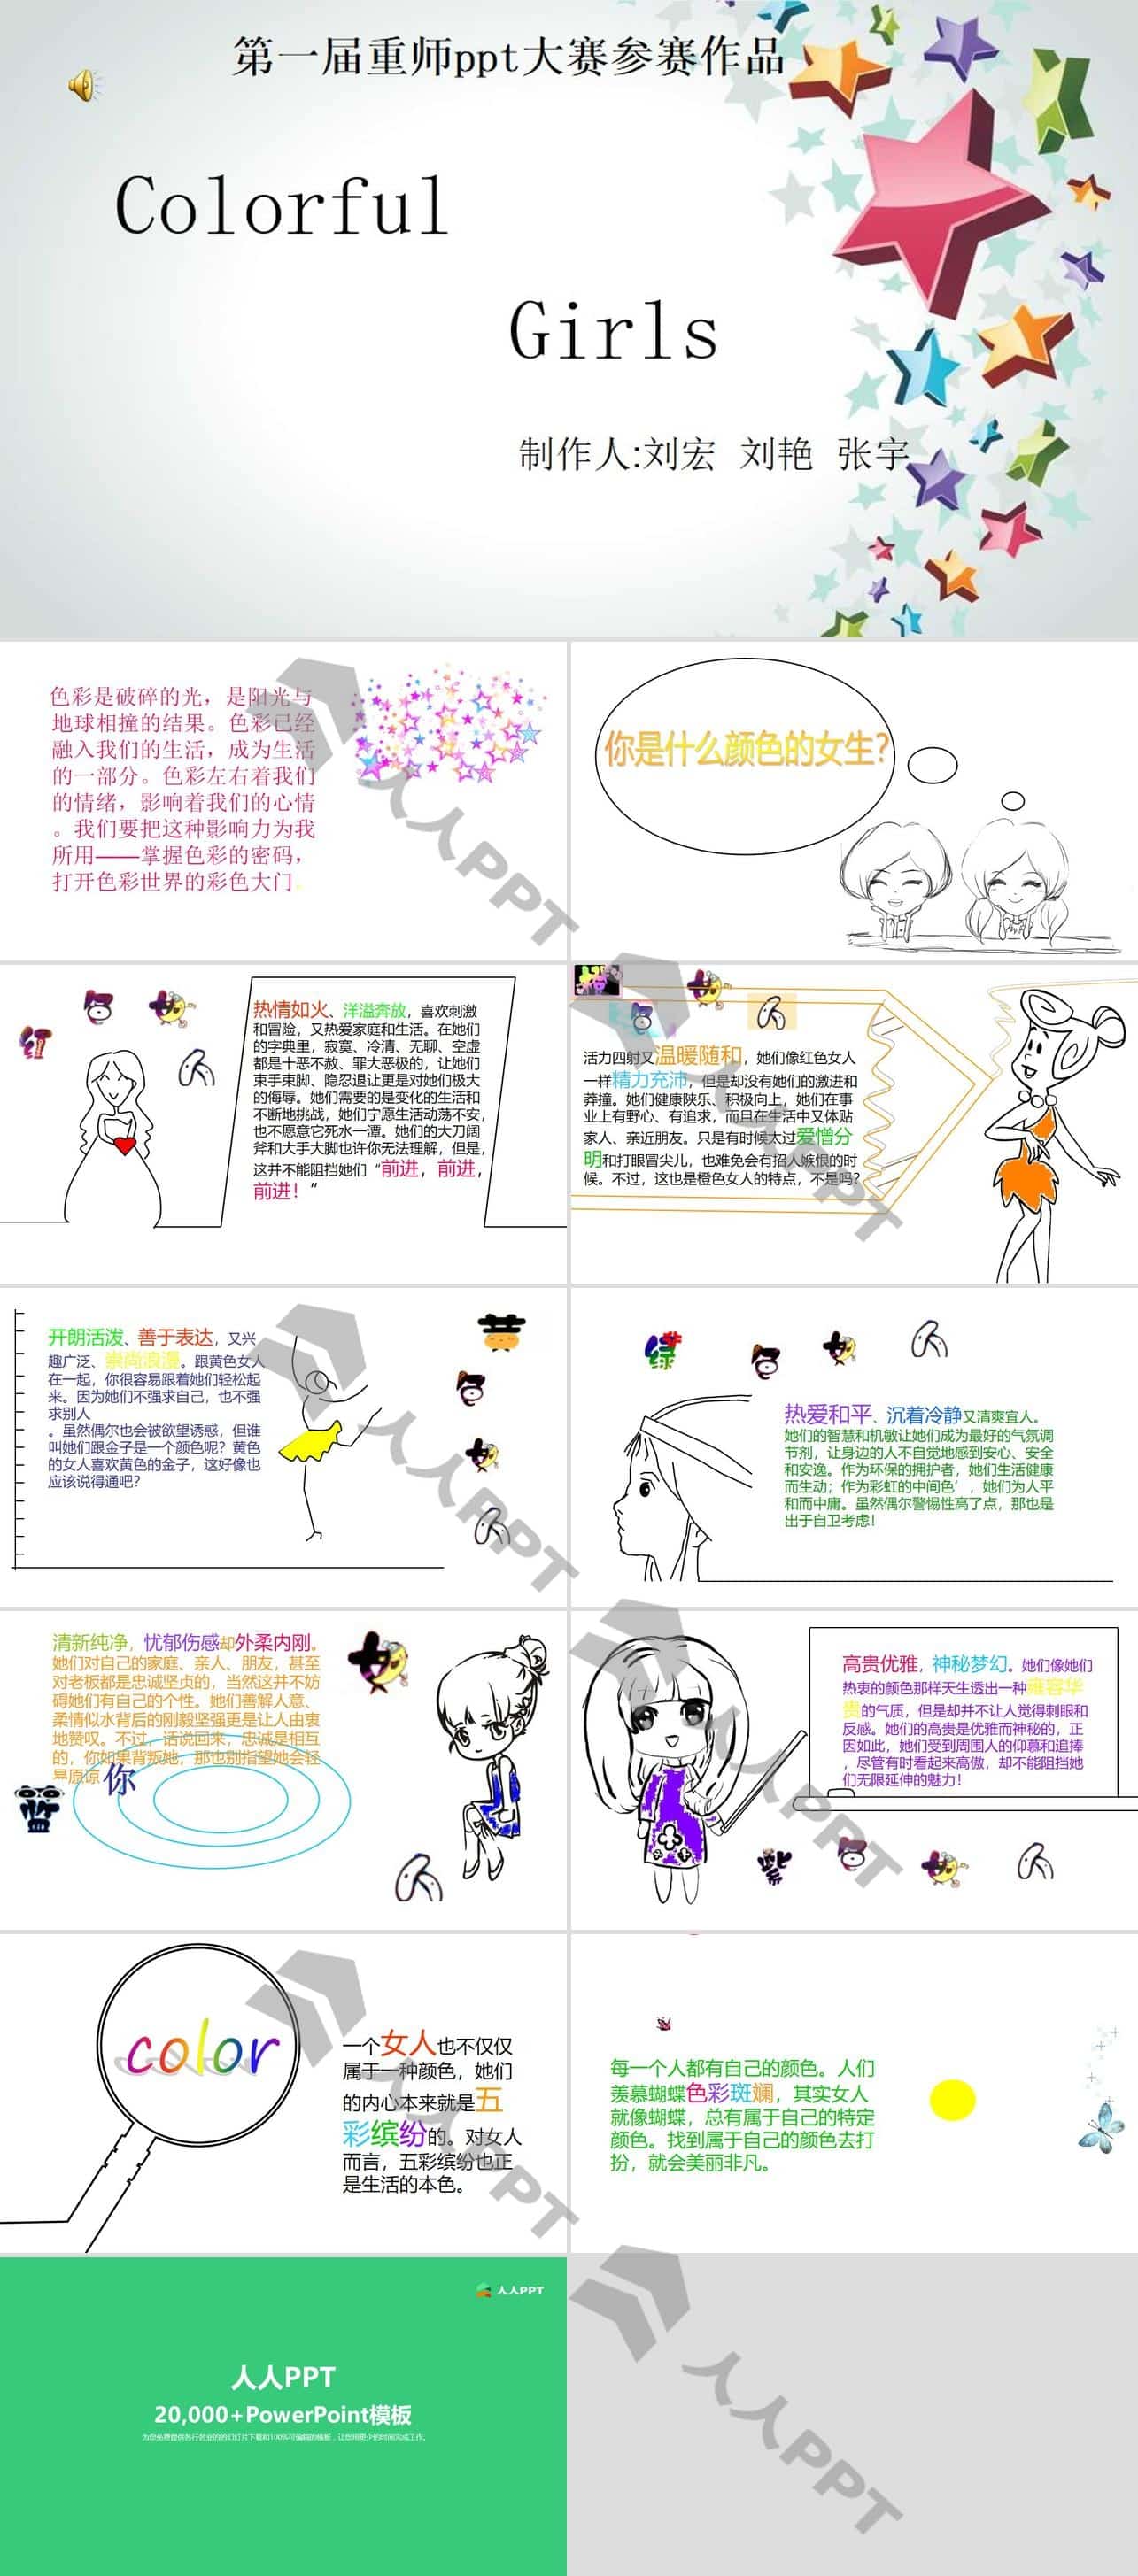 Colorful Girls――第一届重师PPT大赛参赛作品长图